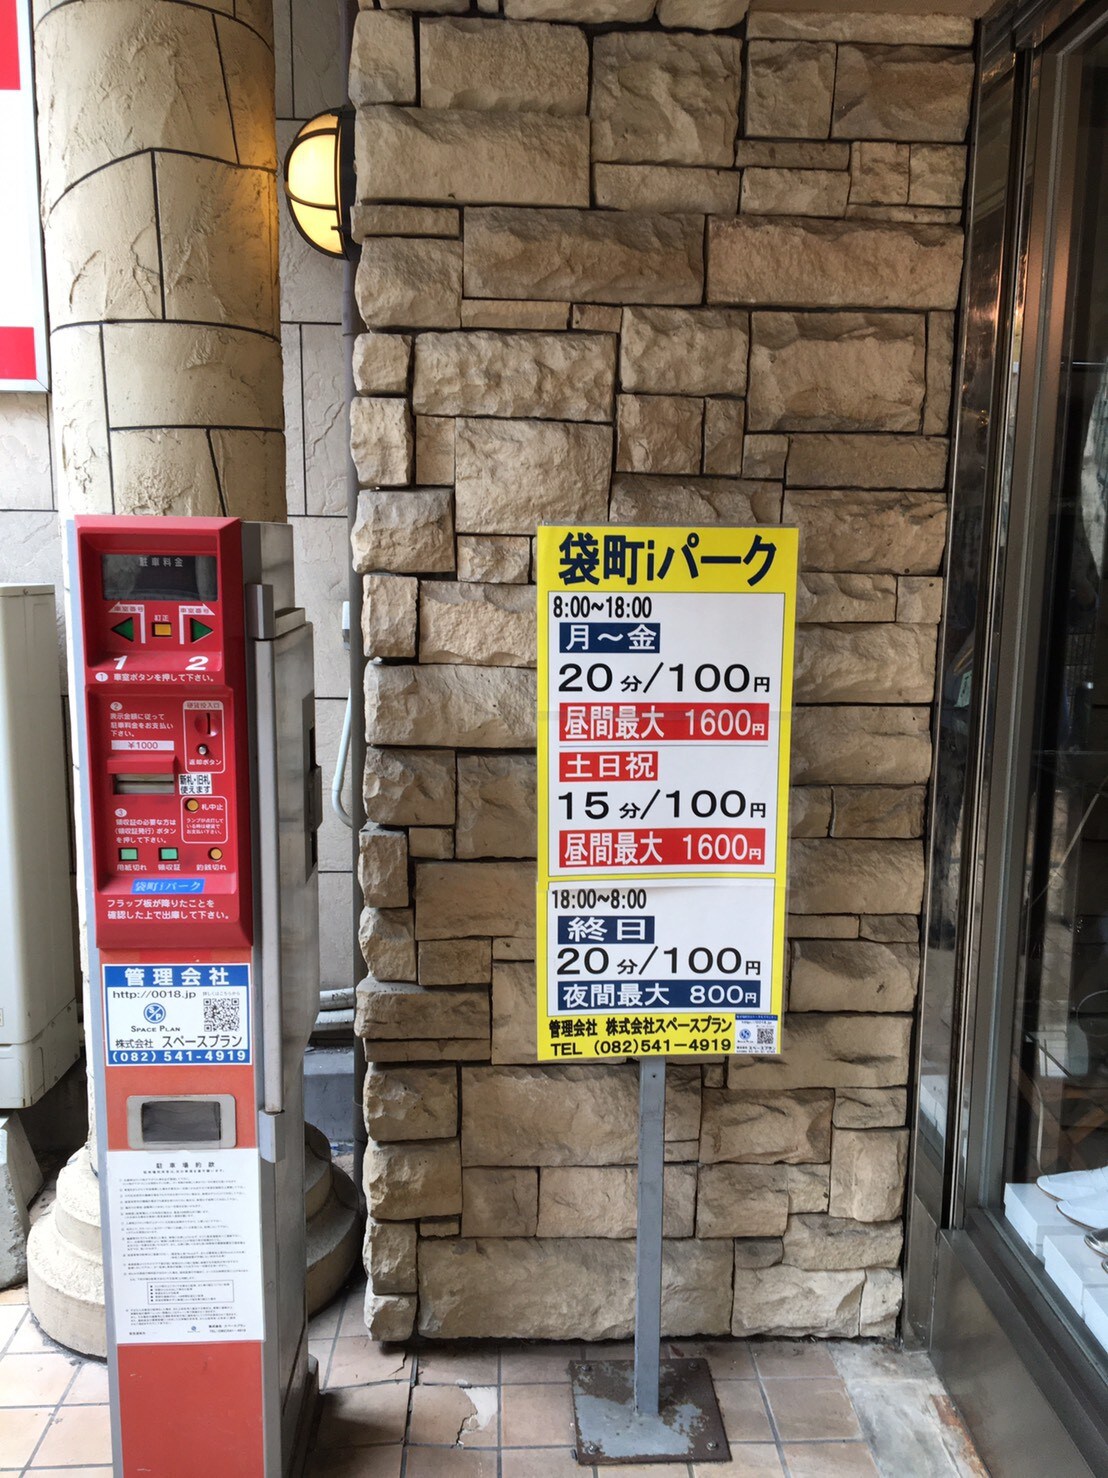 30 Sec Hondori Hiroshima Shopping Arcade # 803